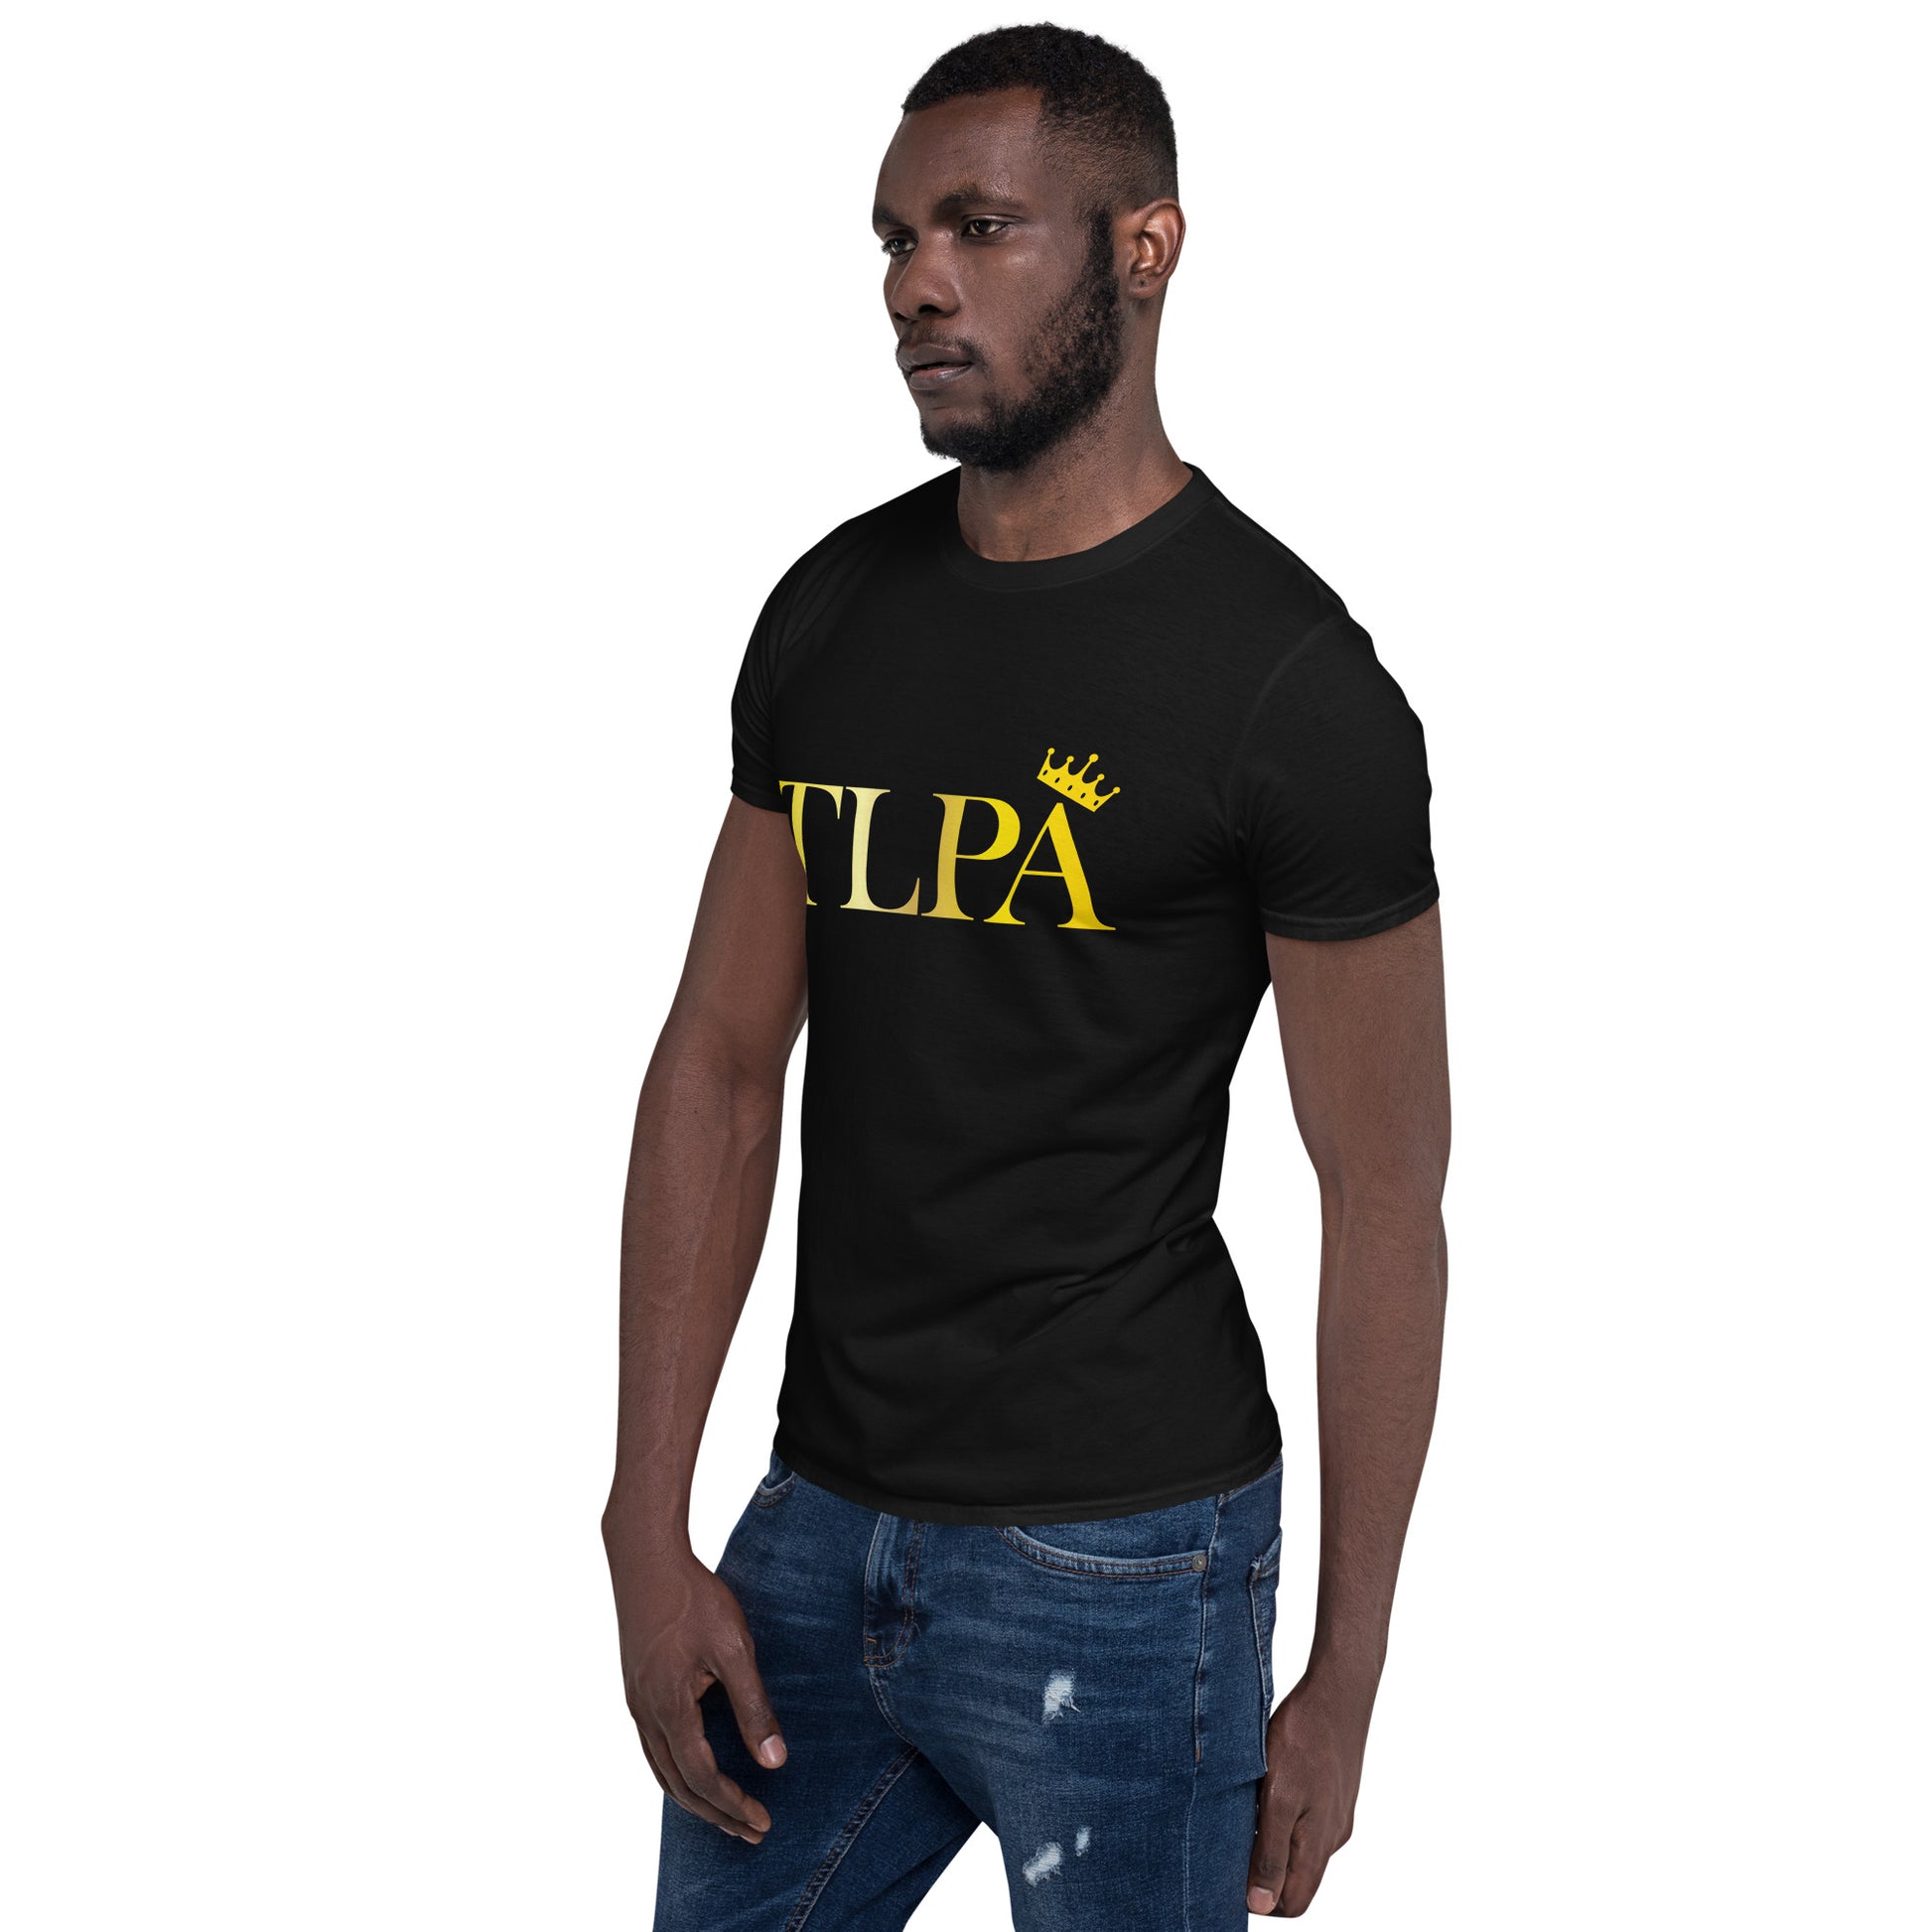 TLPA Short-Sleeve Unisex T-Shirt - SHOPTLPA.COM